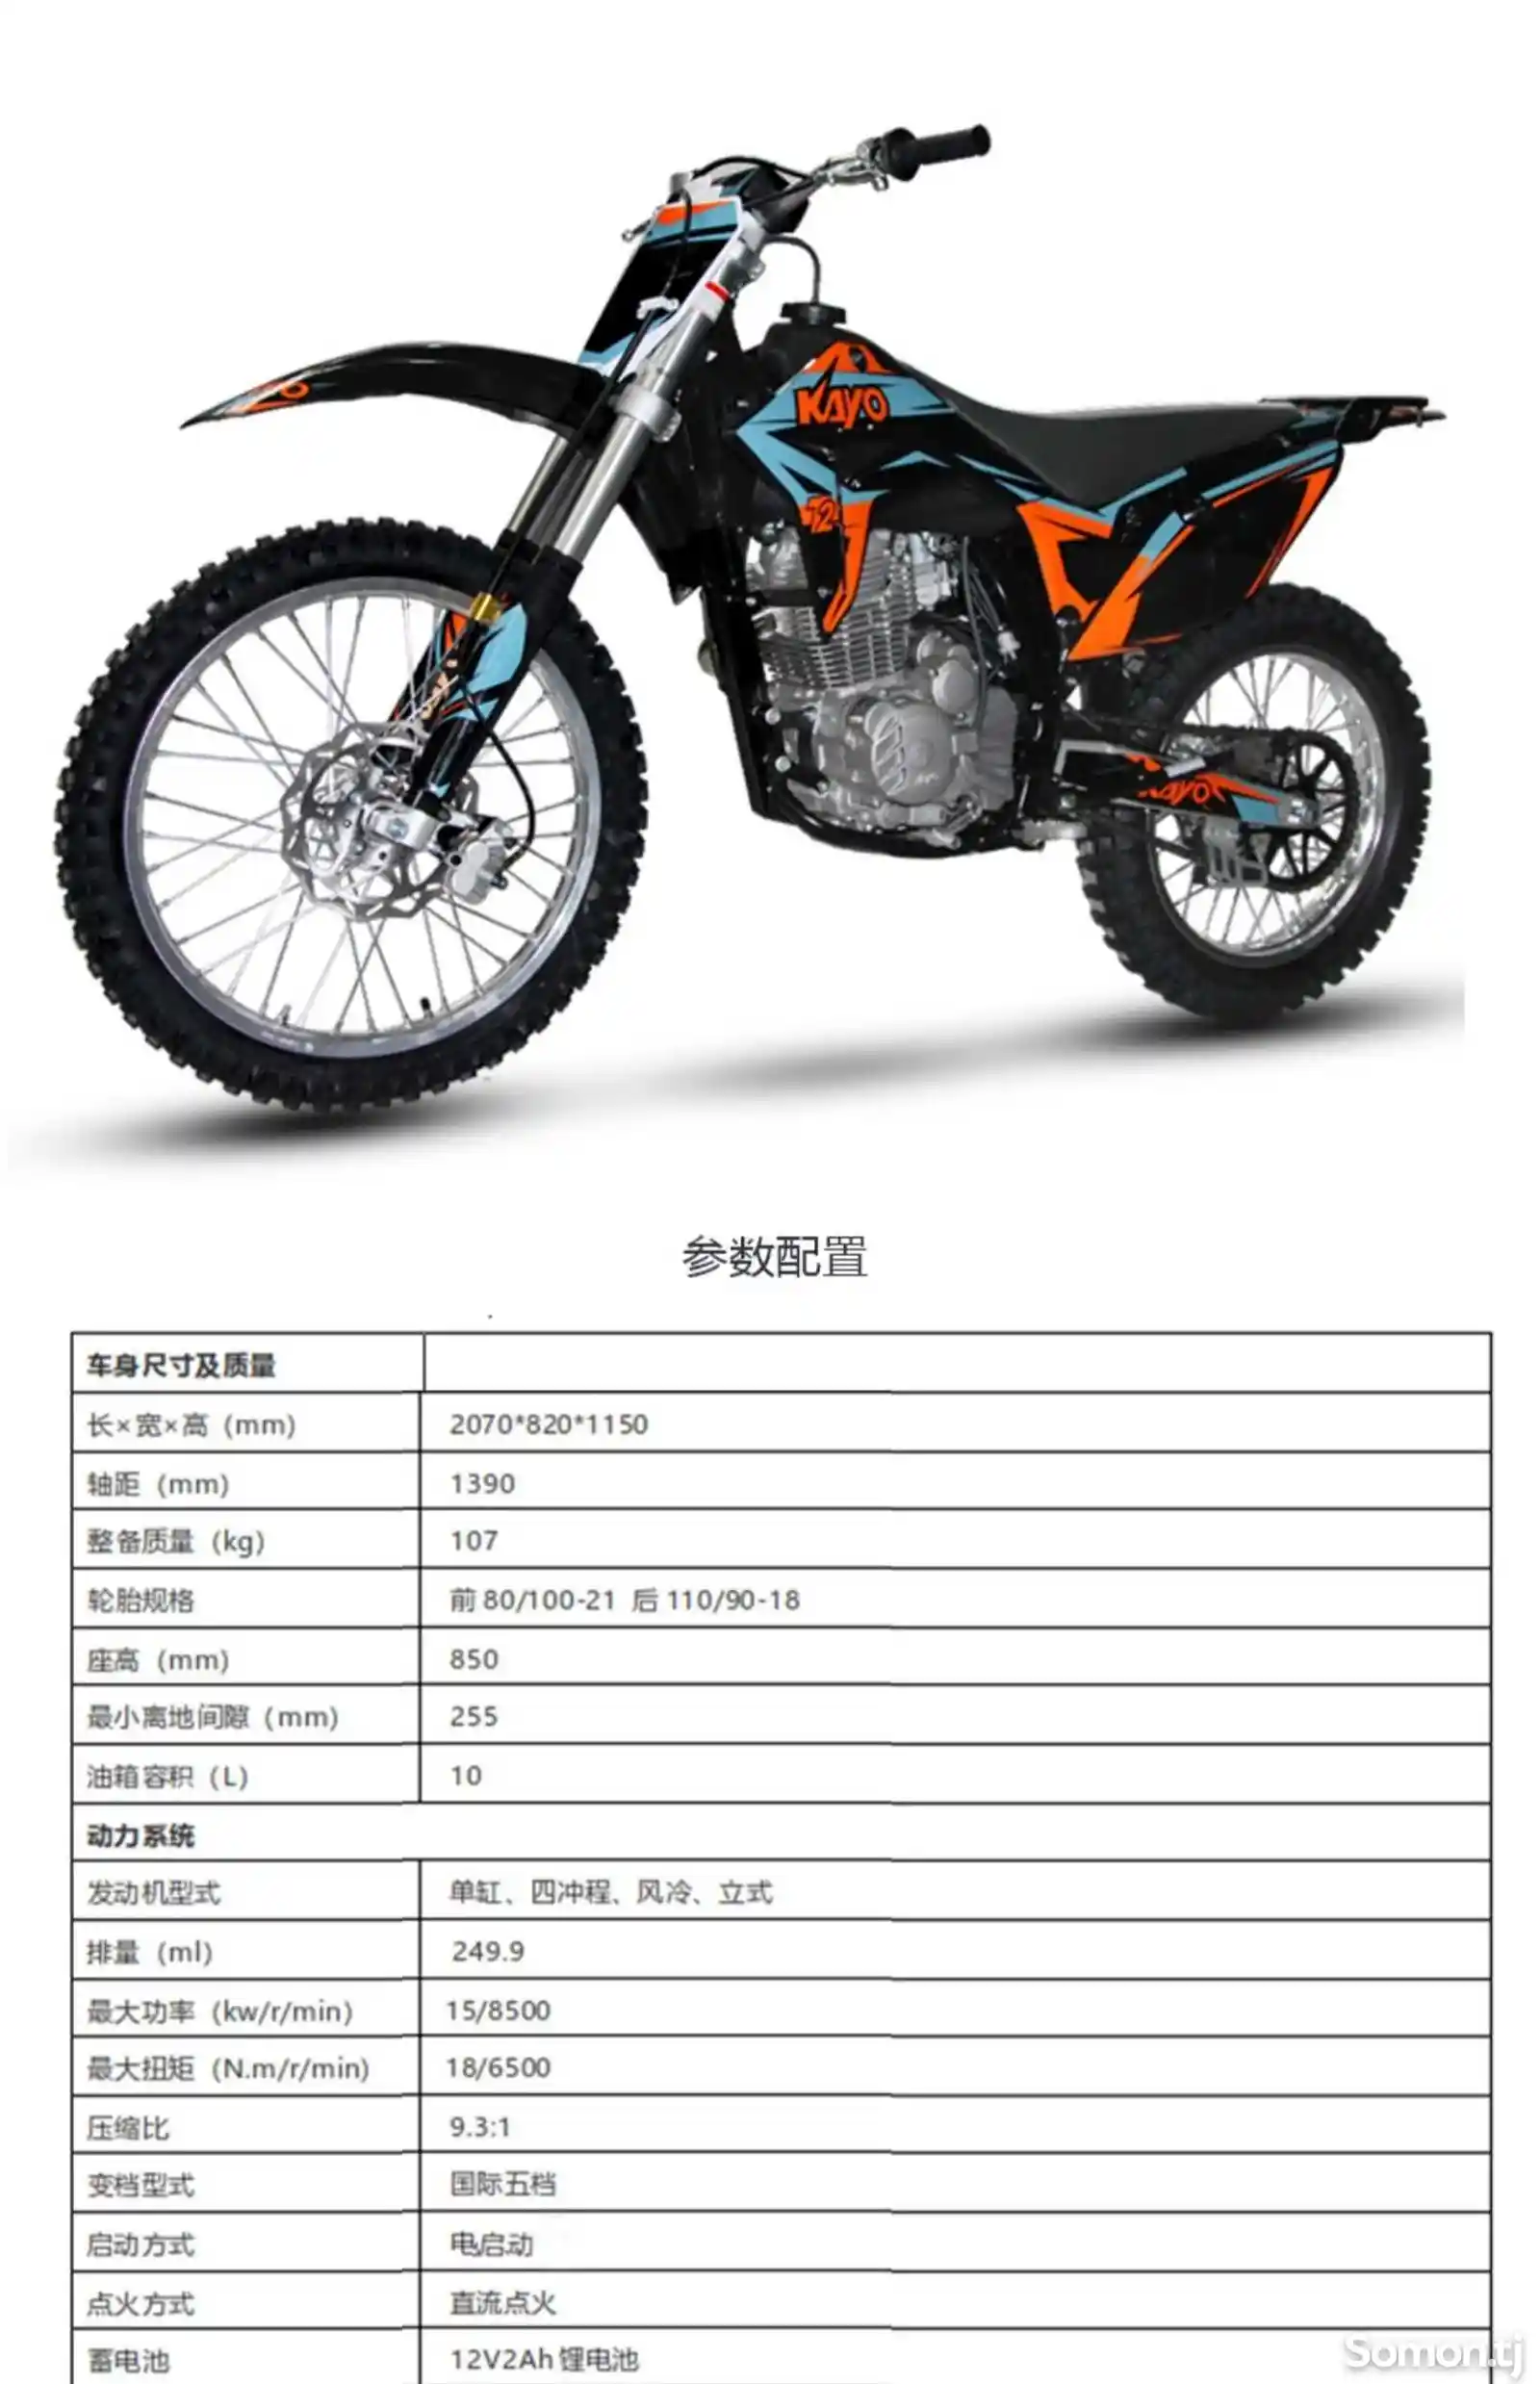 Мотокросс Endura Kayo T2-250cc на заказ-2